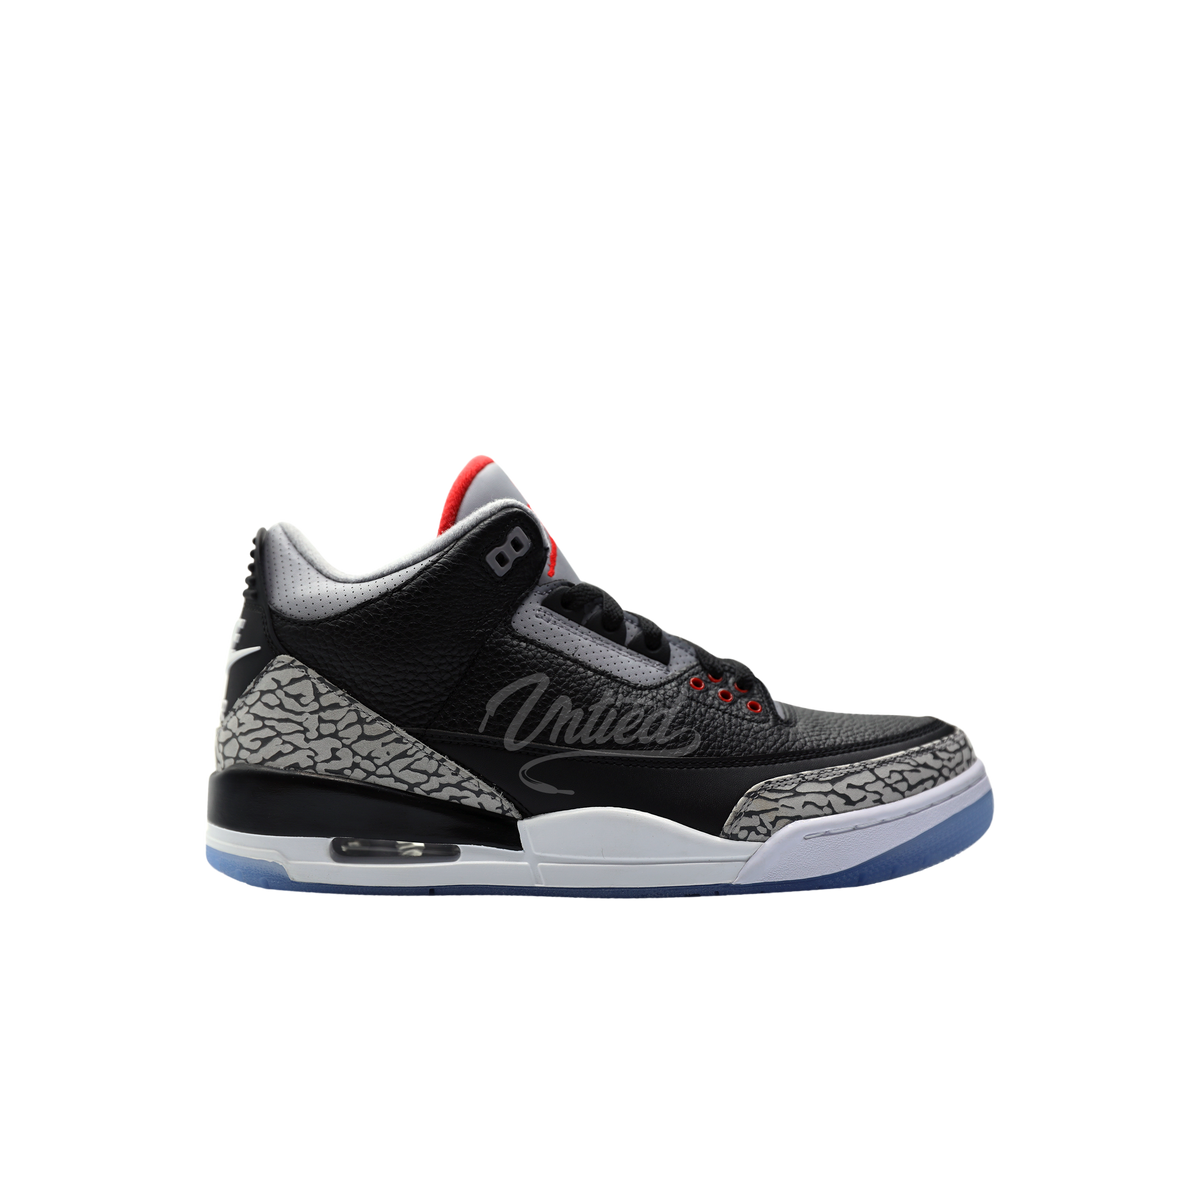 Air Jordan 3 Victory Lap PE "Black Cement"